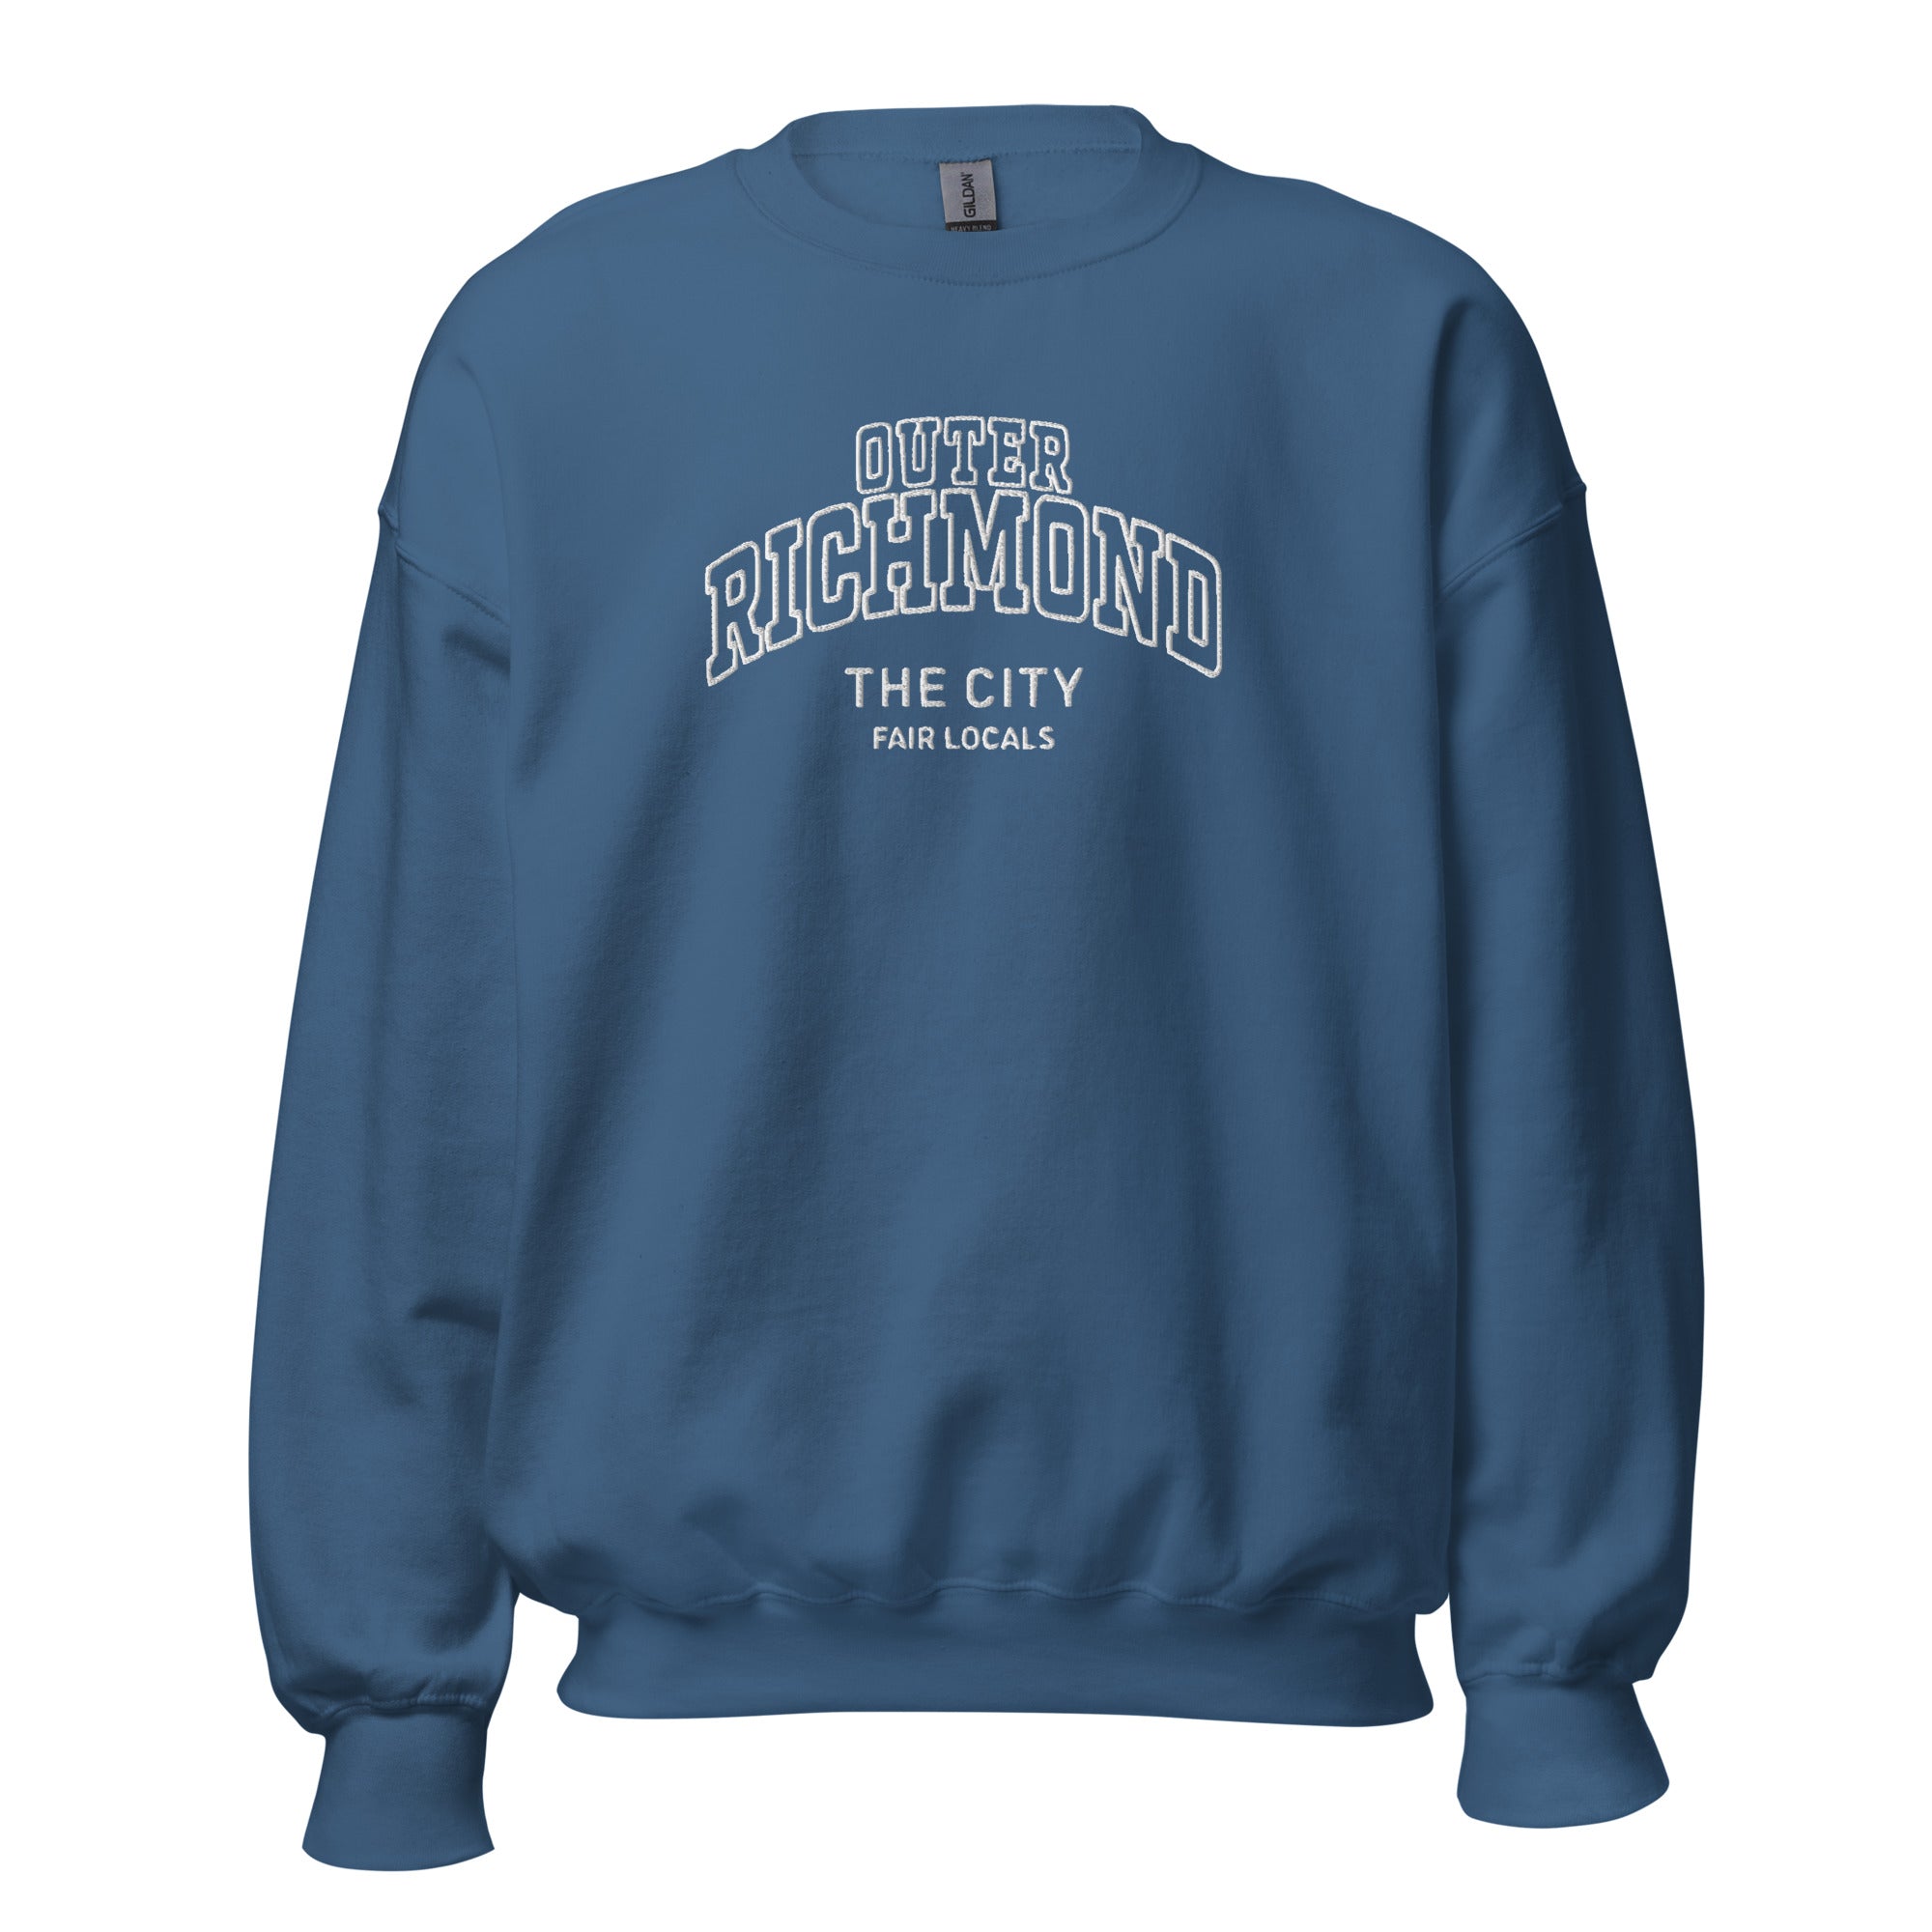 Headline Embroidered Crew Neck Sweatshirt - Outer Richmond | San Francisco, CA